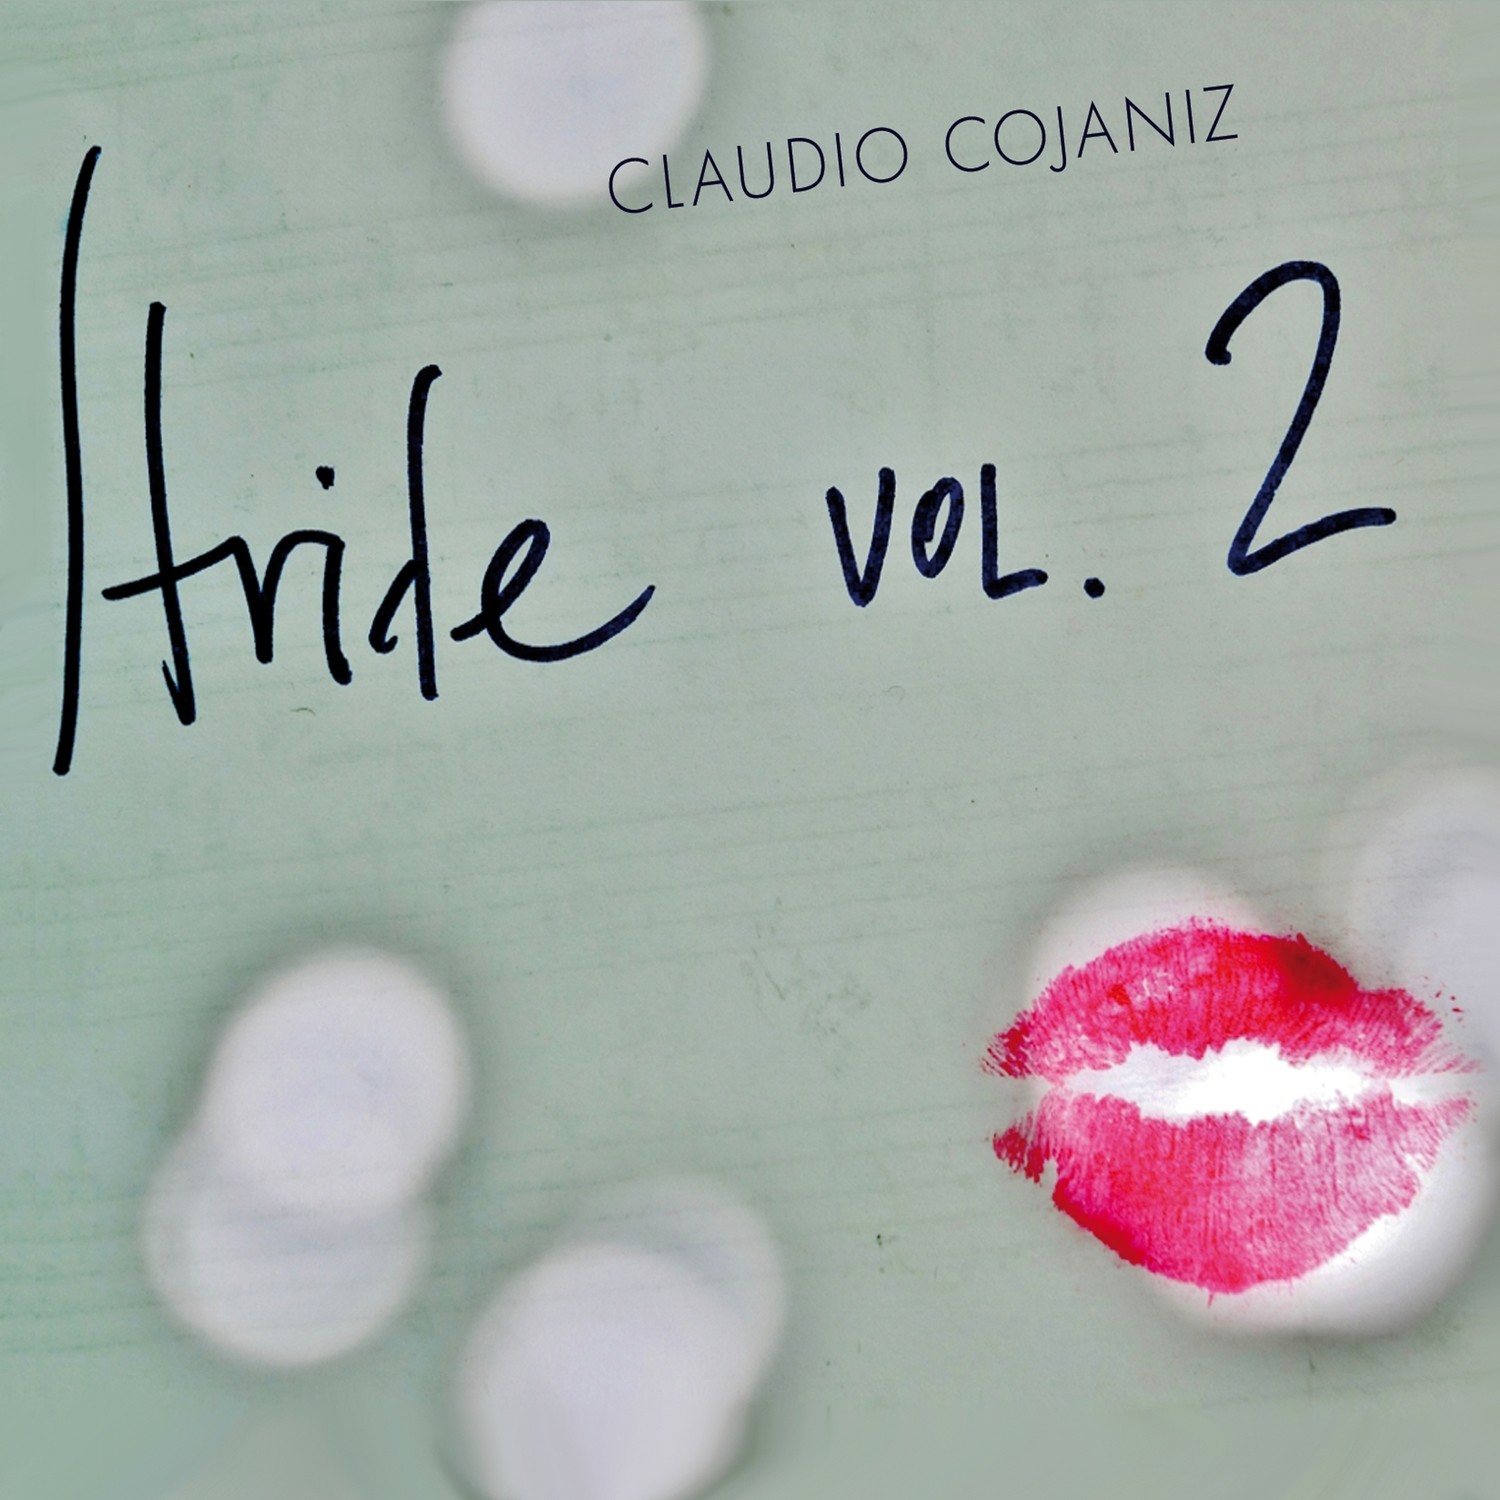 CLAUDIO COJANIZ «Stride vol. 2»